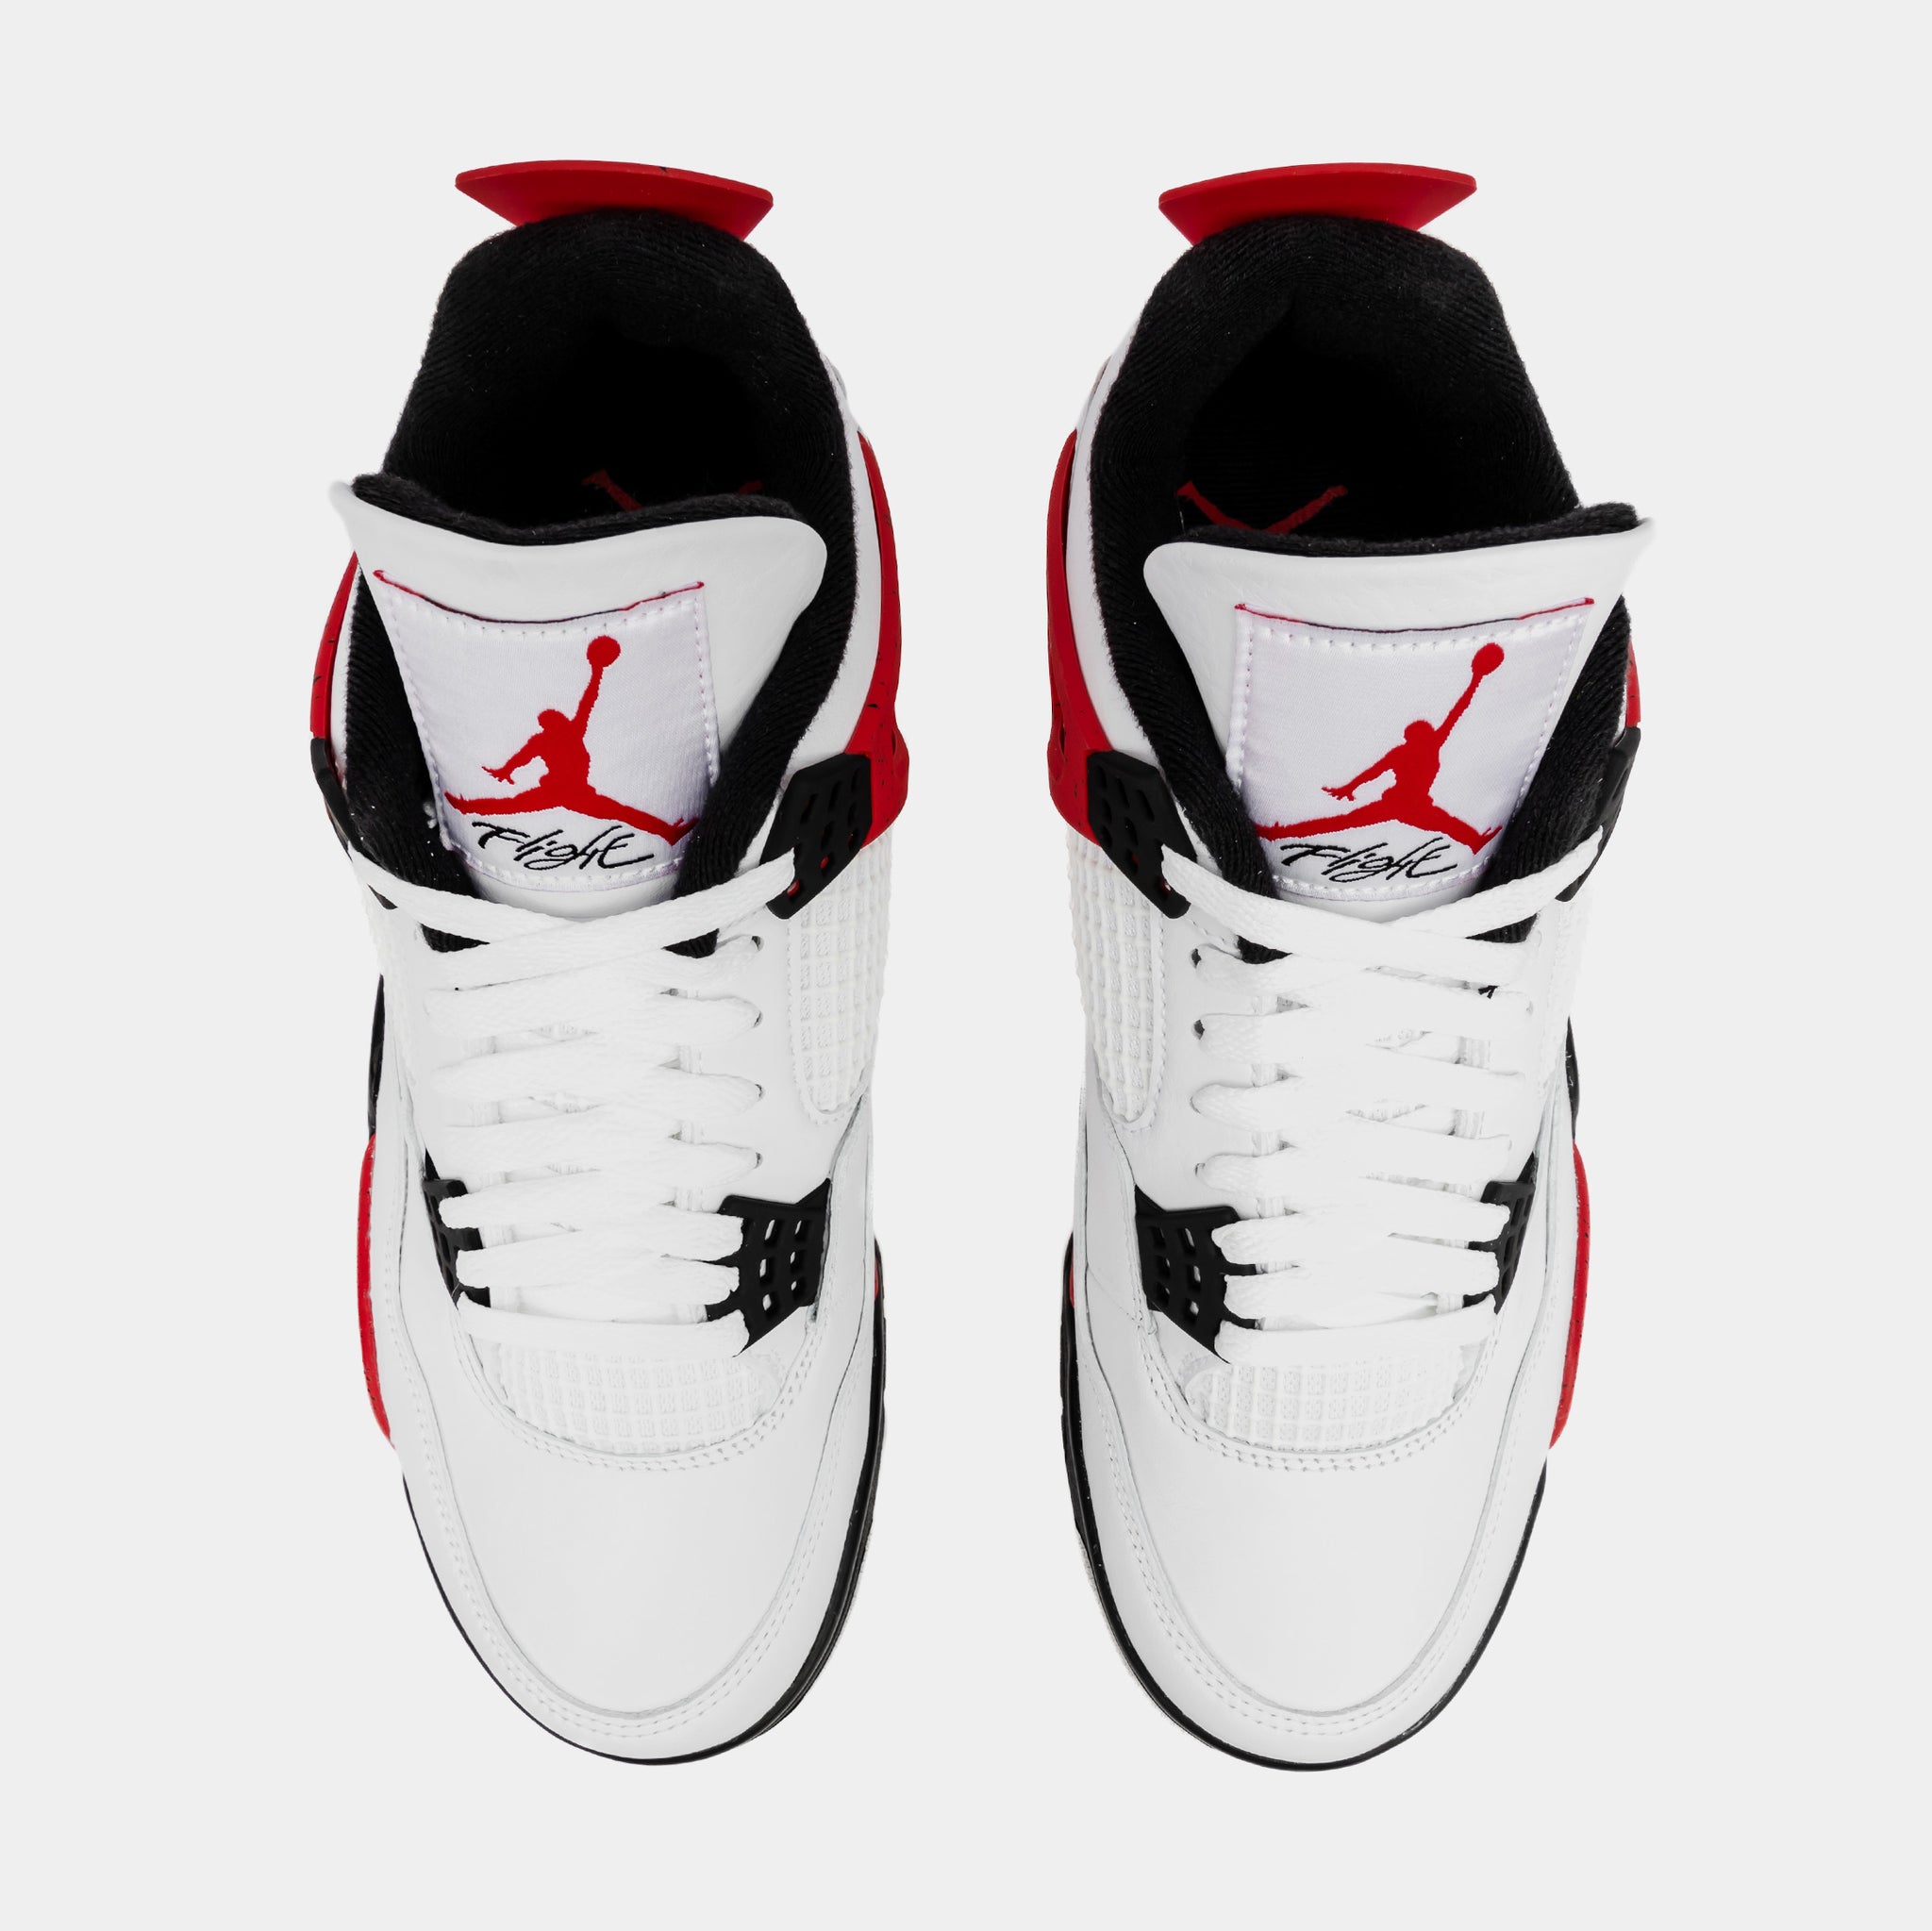 Nike Air Max 270 Mens Running Shoe Red Red CV7544-600 – Shoe Palace